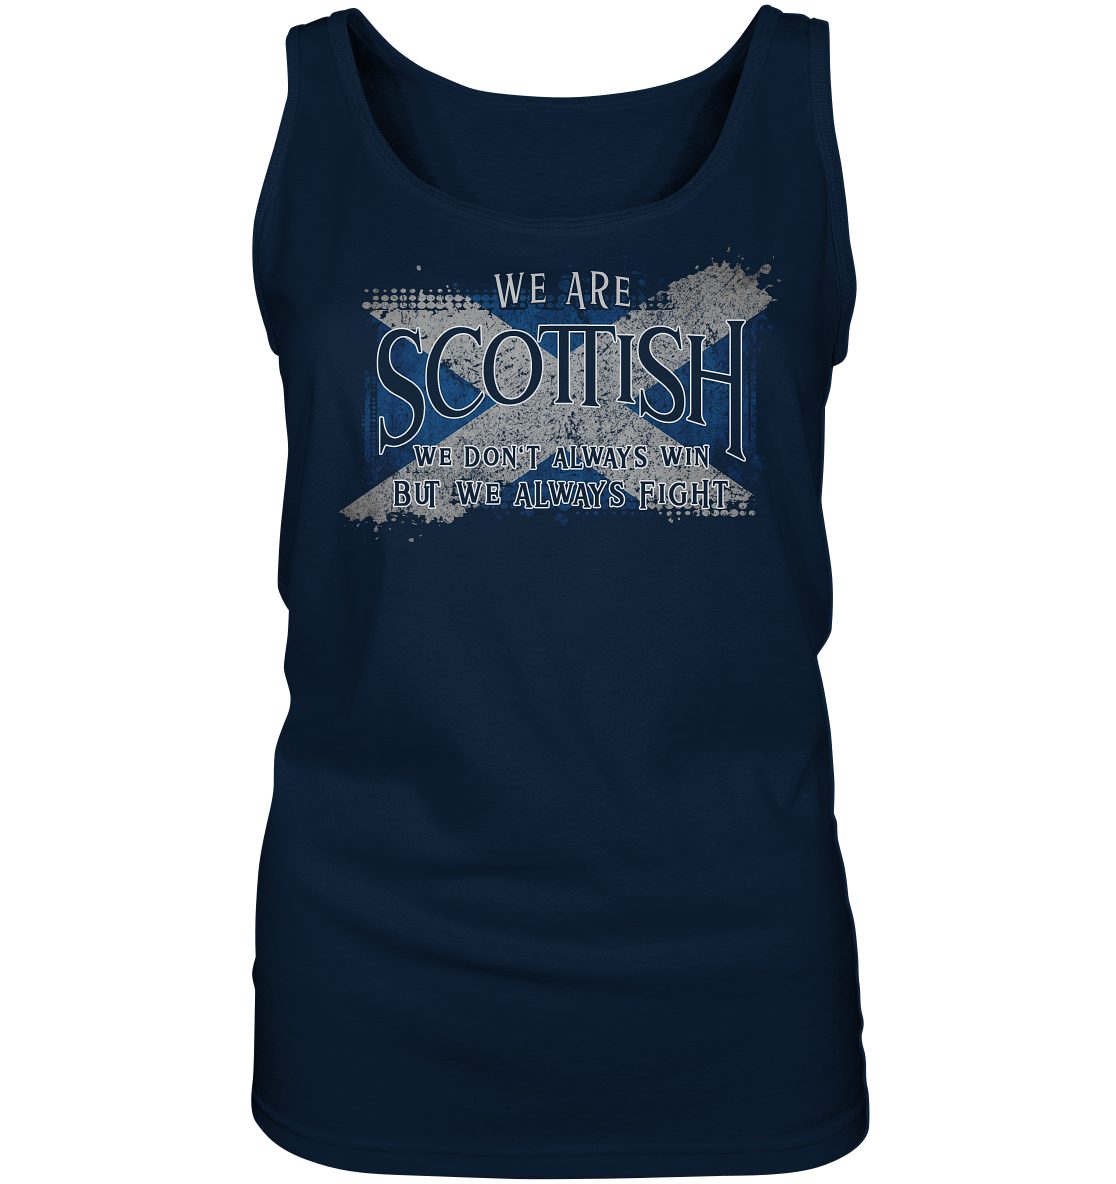 We Are Scottish "We Always Fight" - Ladies Tank-Top